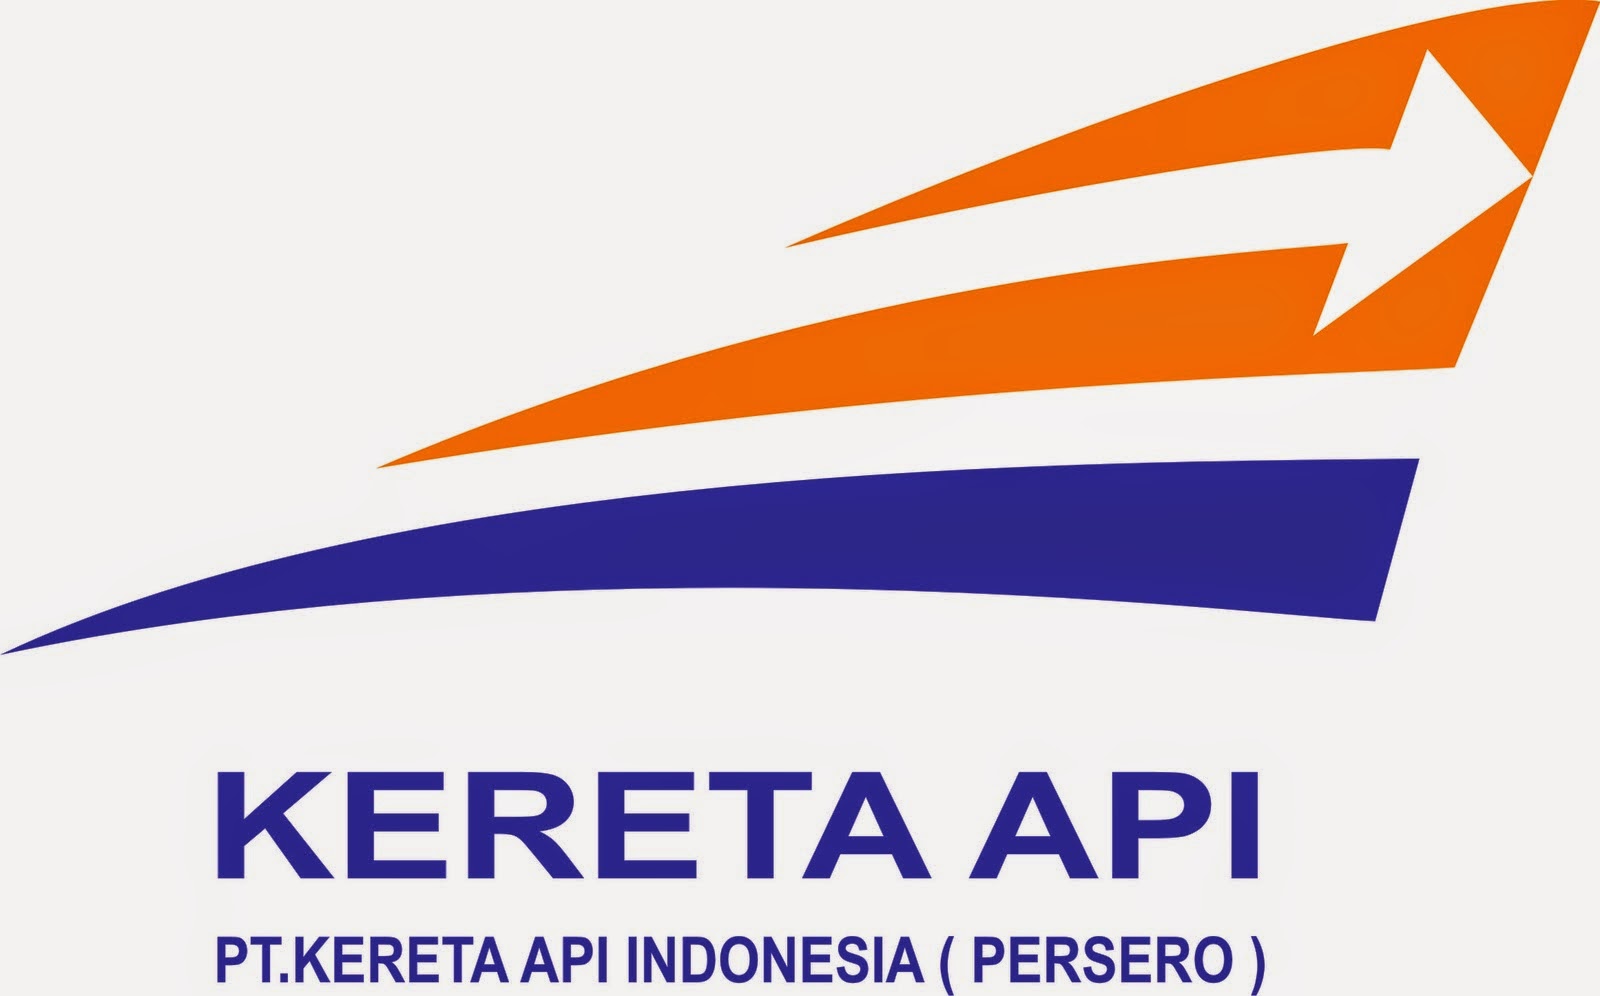 PT. KERETA API INDONESIA (PERSERO)